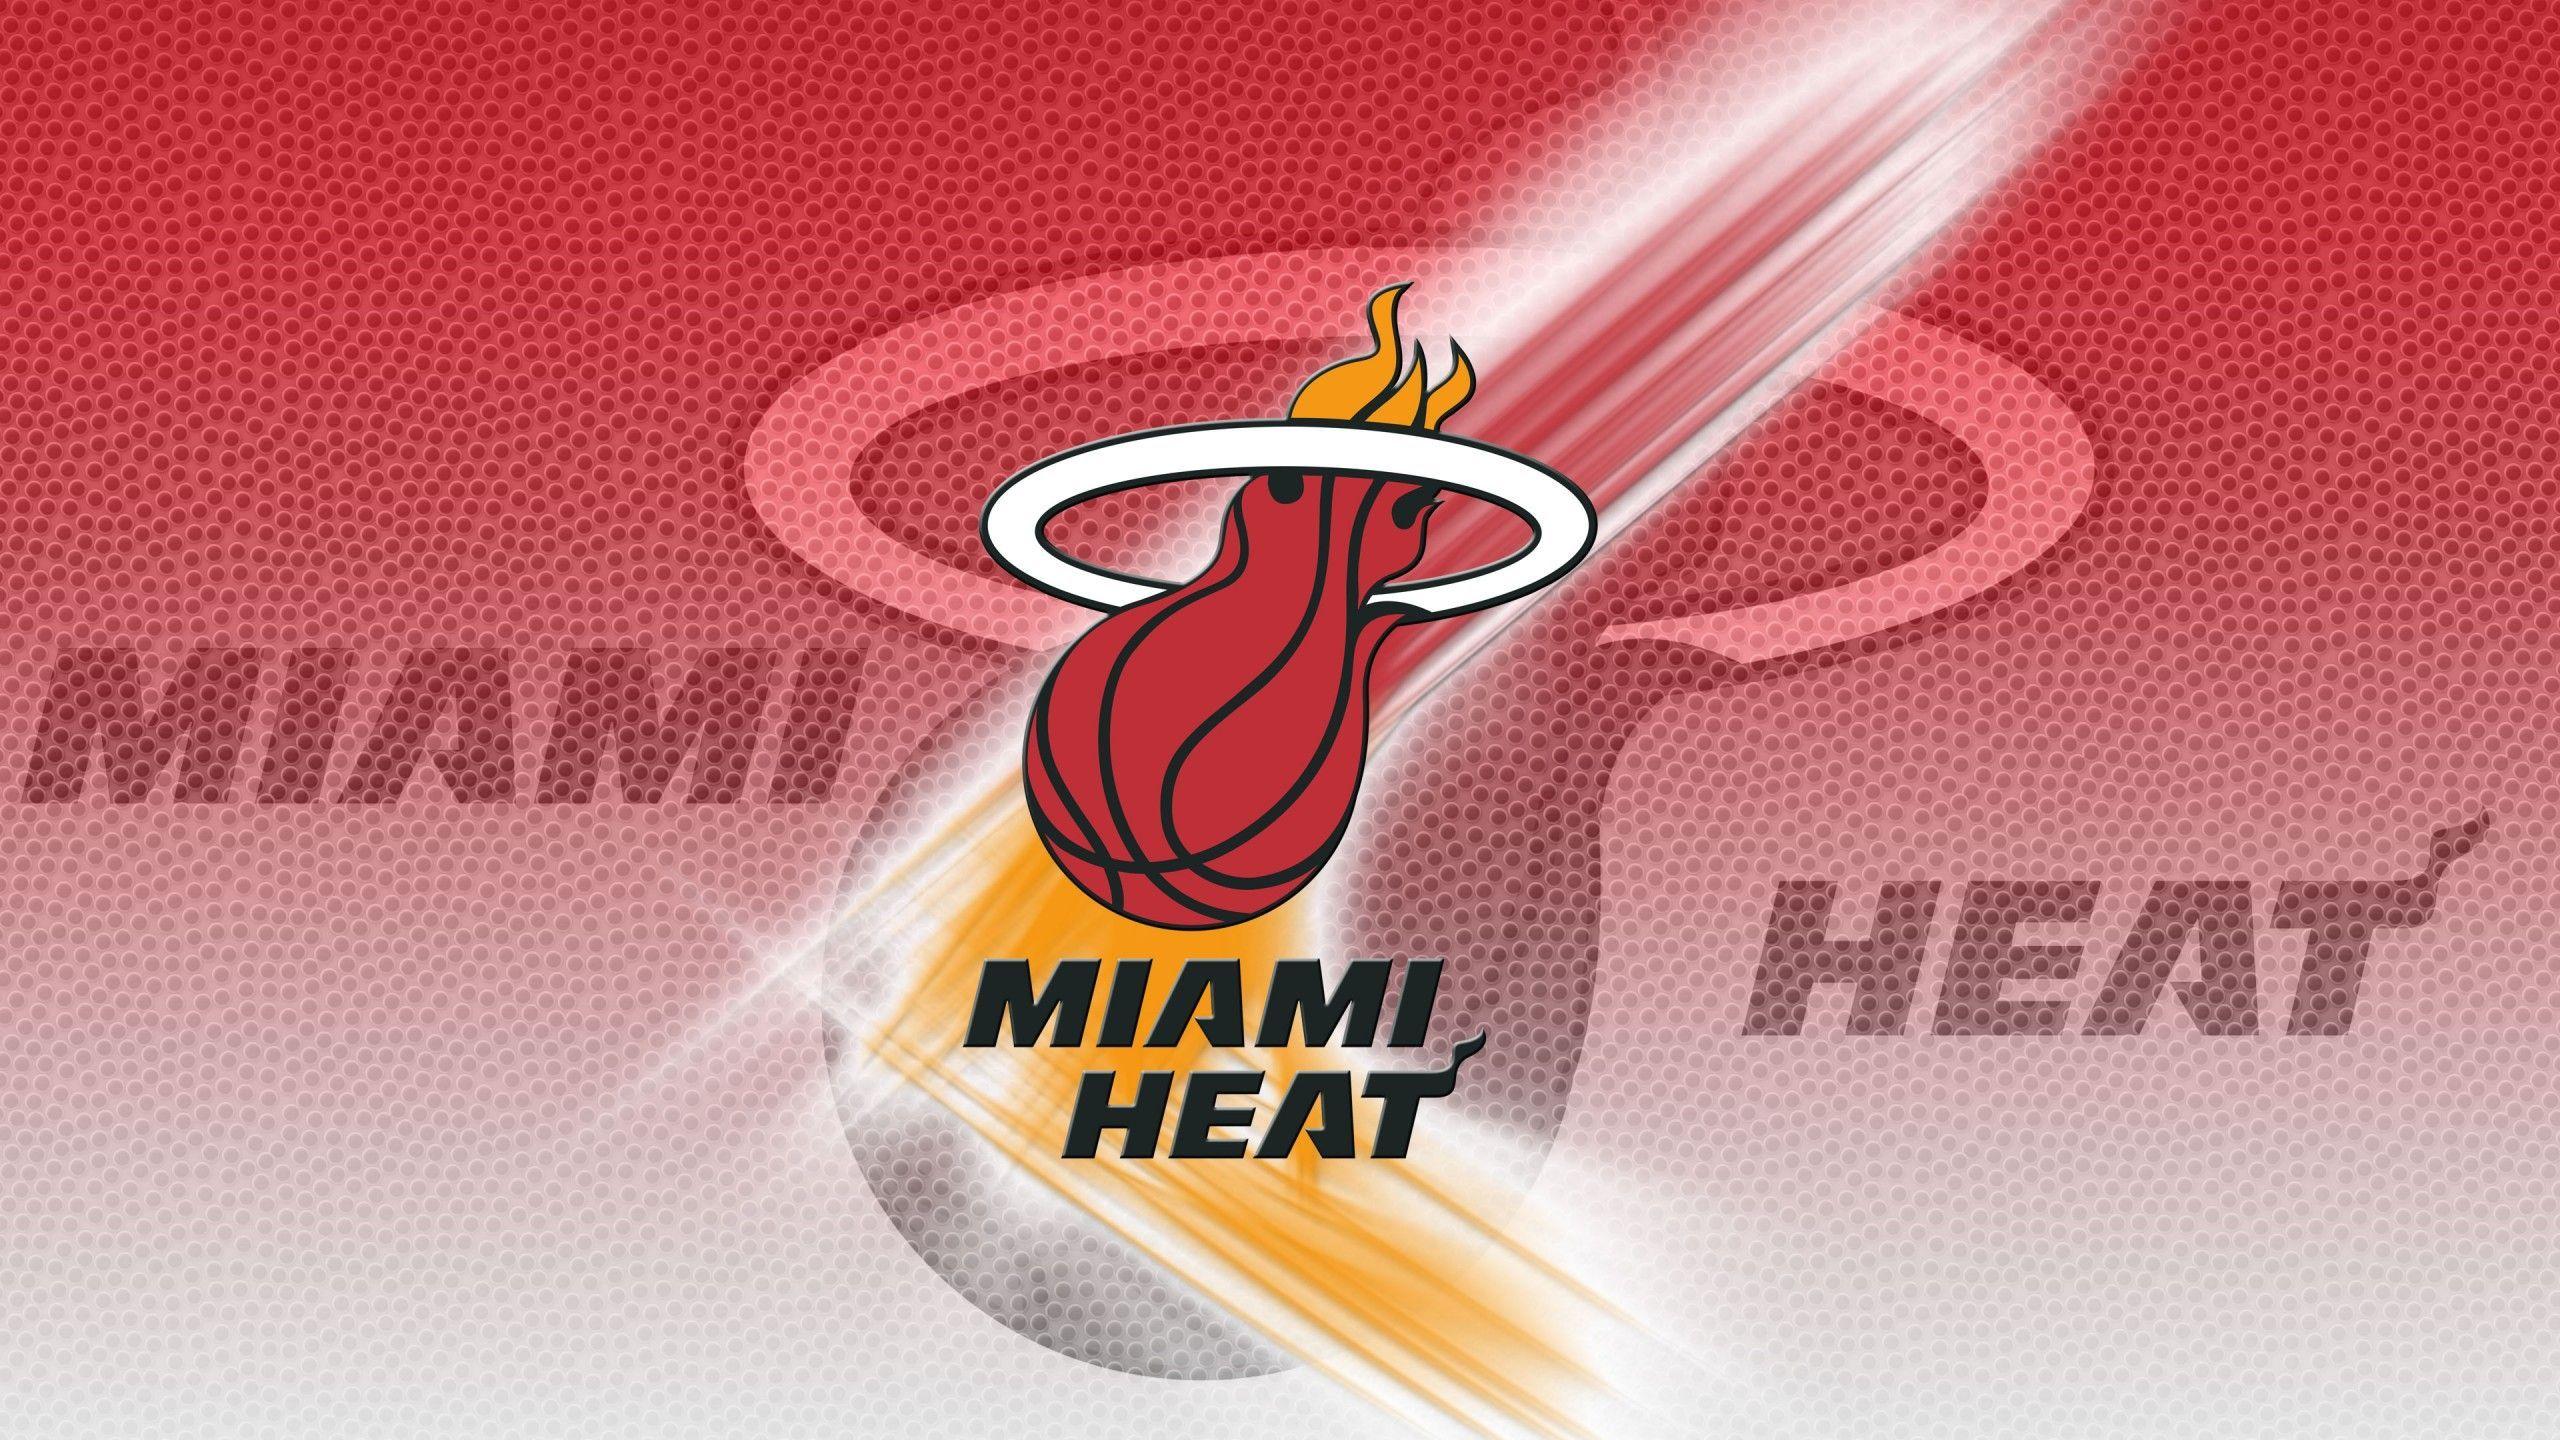 Miami Heat 2014 Logo NBA Wallpaper Wide or HD